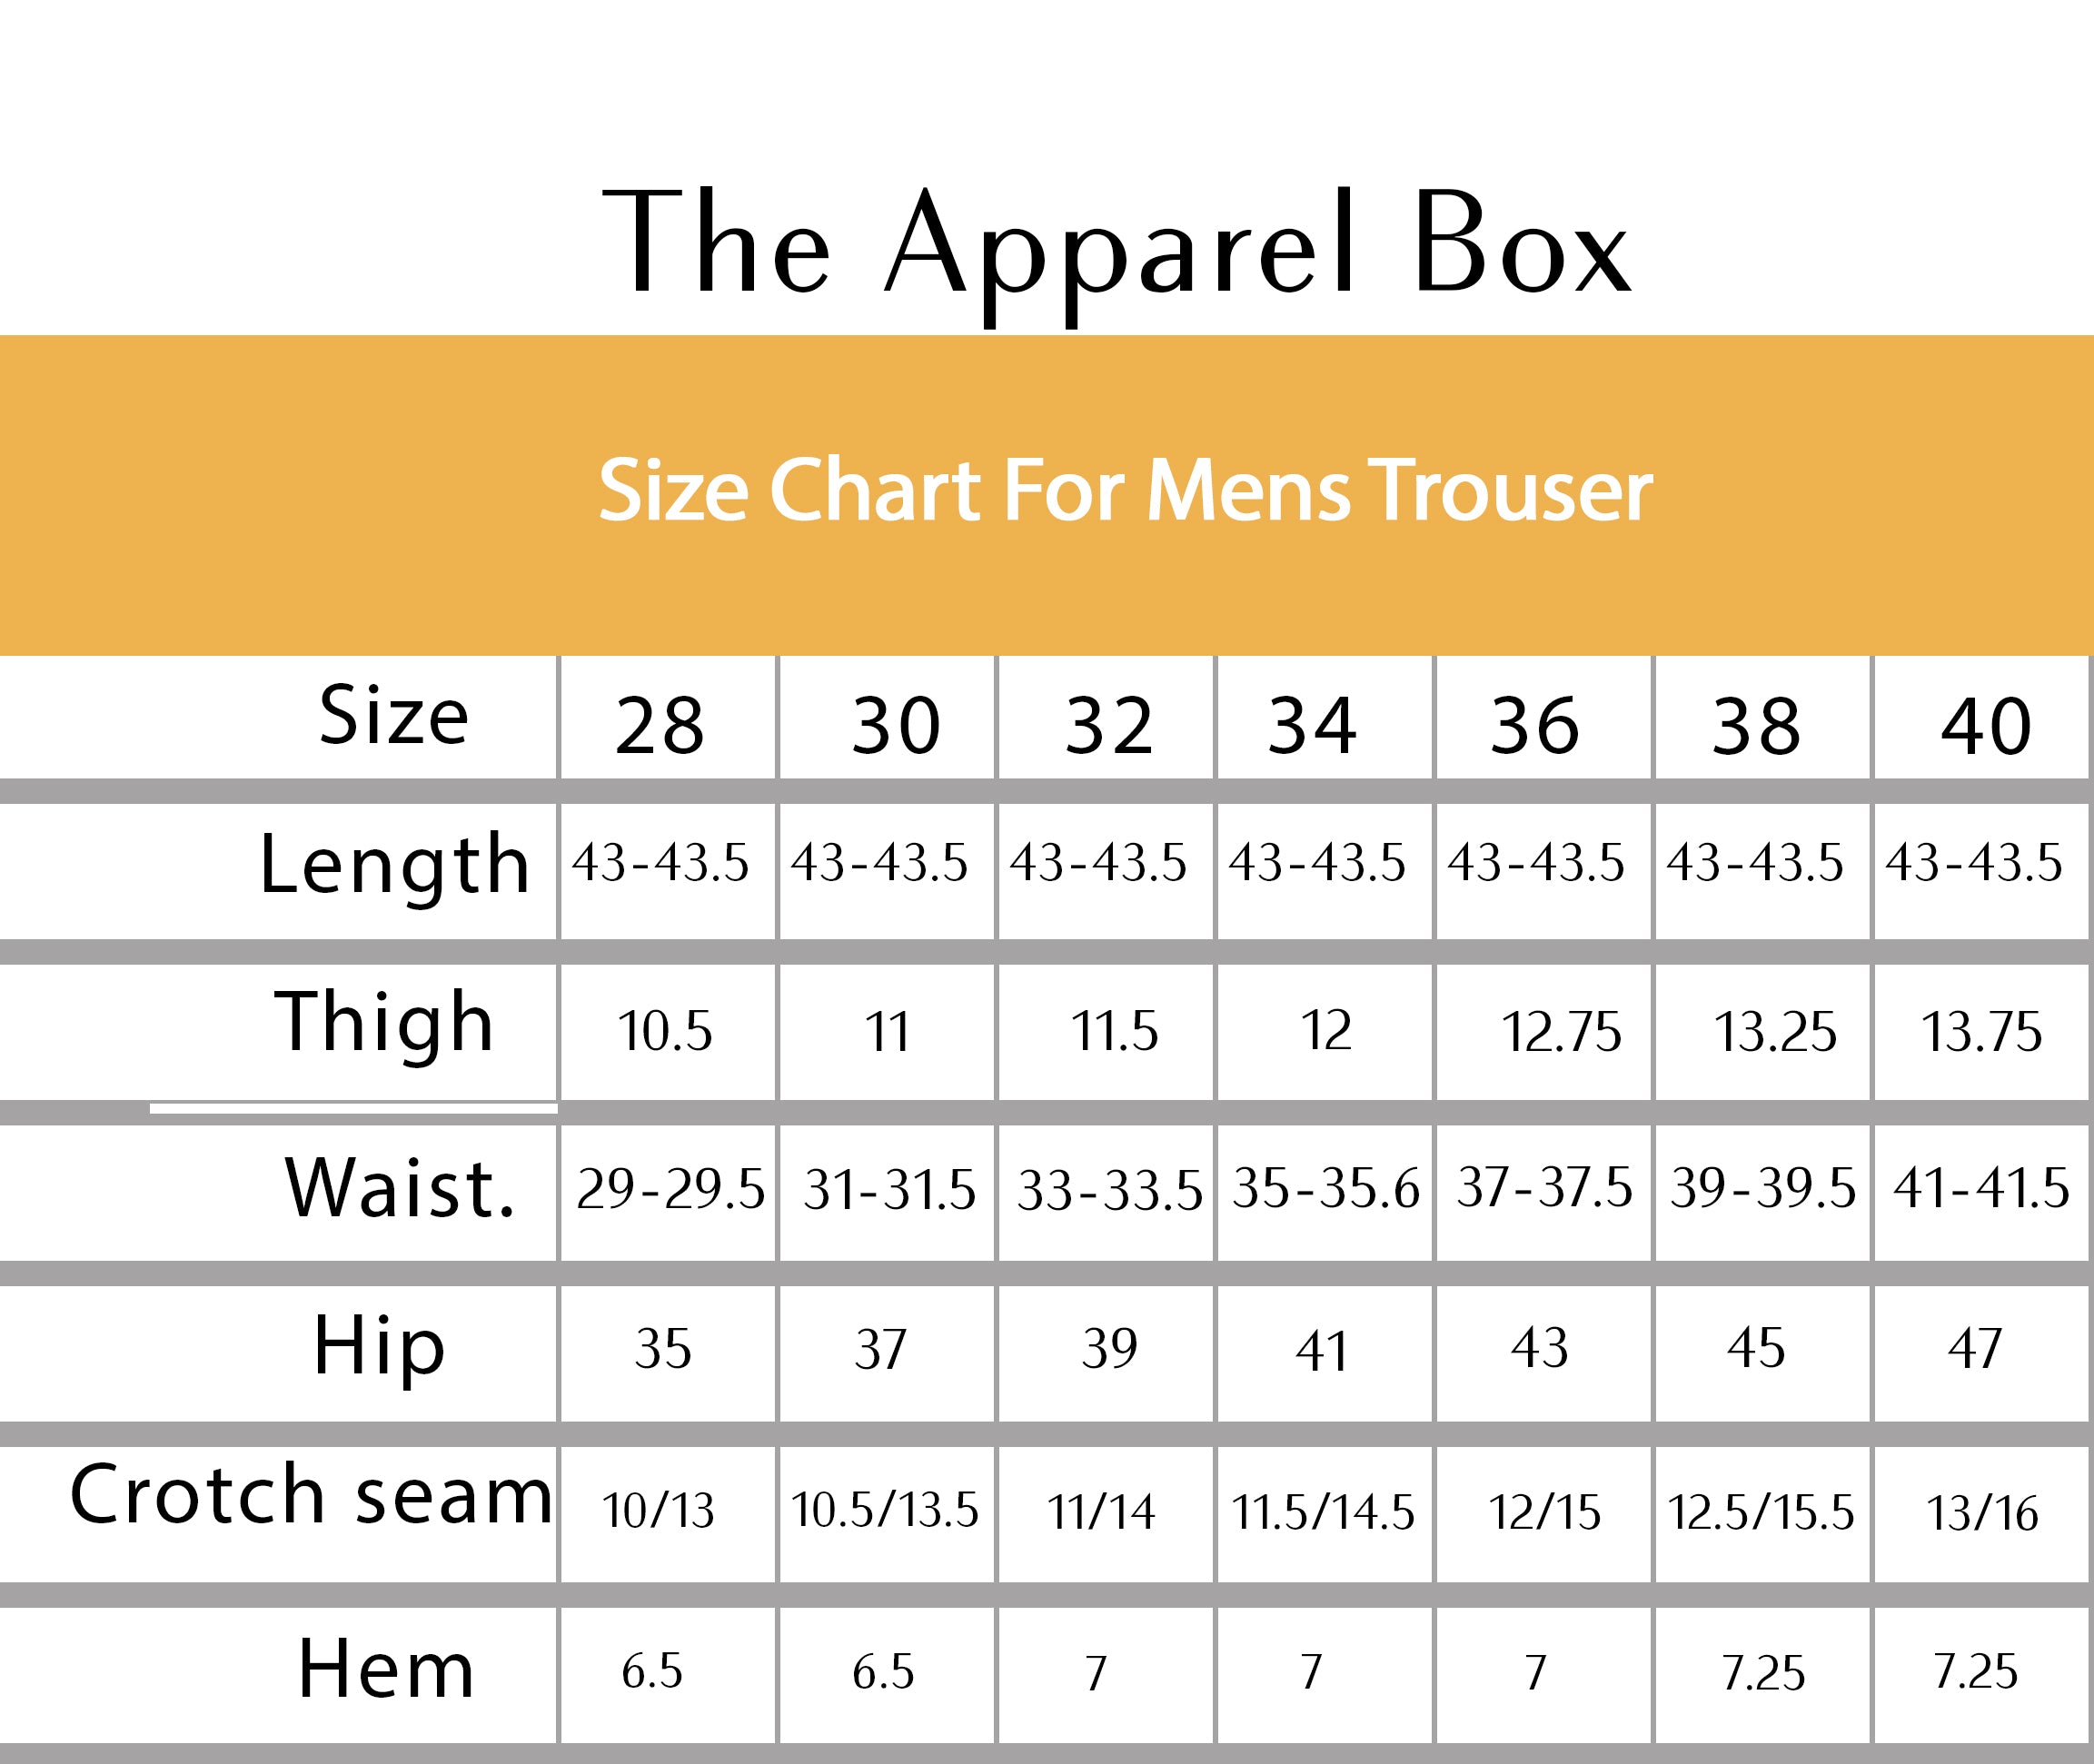 Men's Trouser Size Chart – The Apparel Box